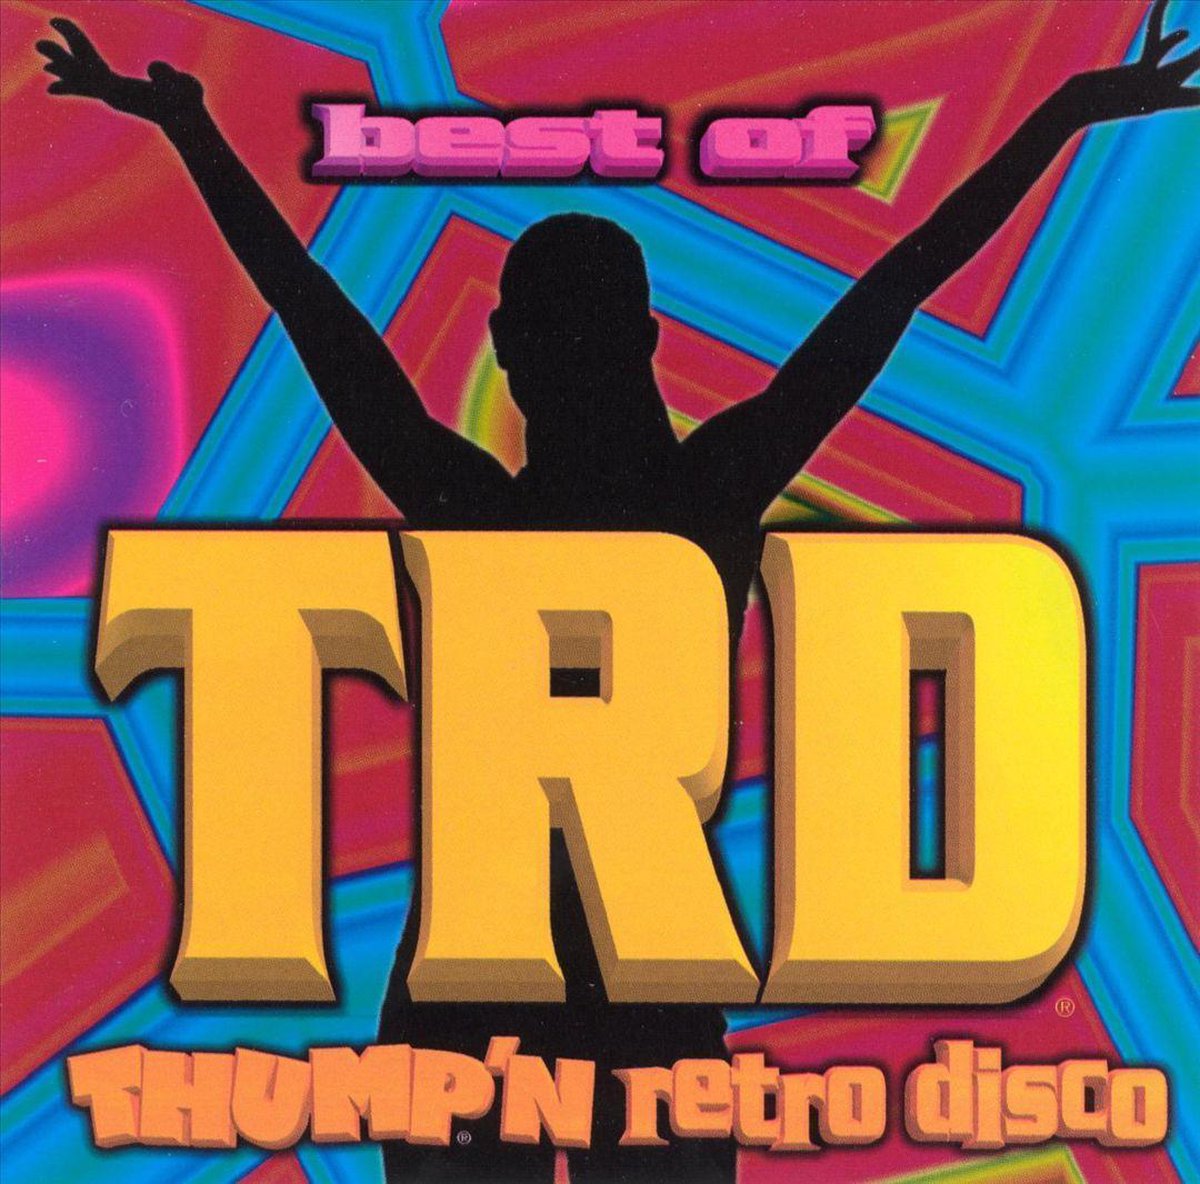 Best of Thump Retro Disco - various artists